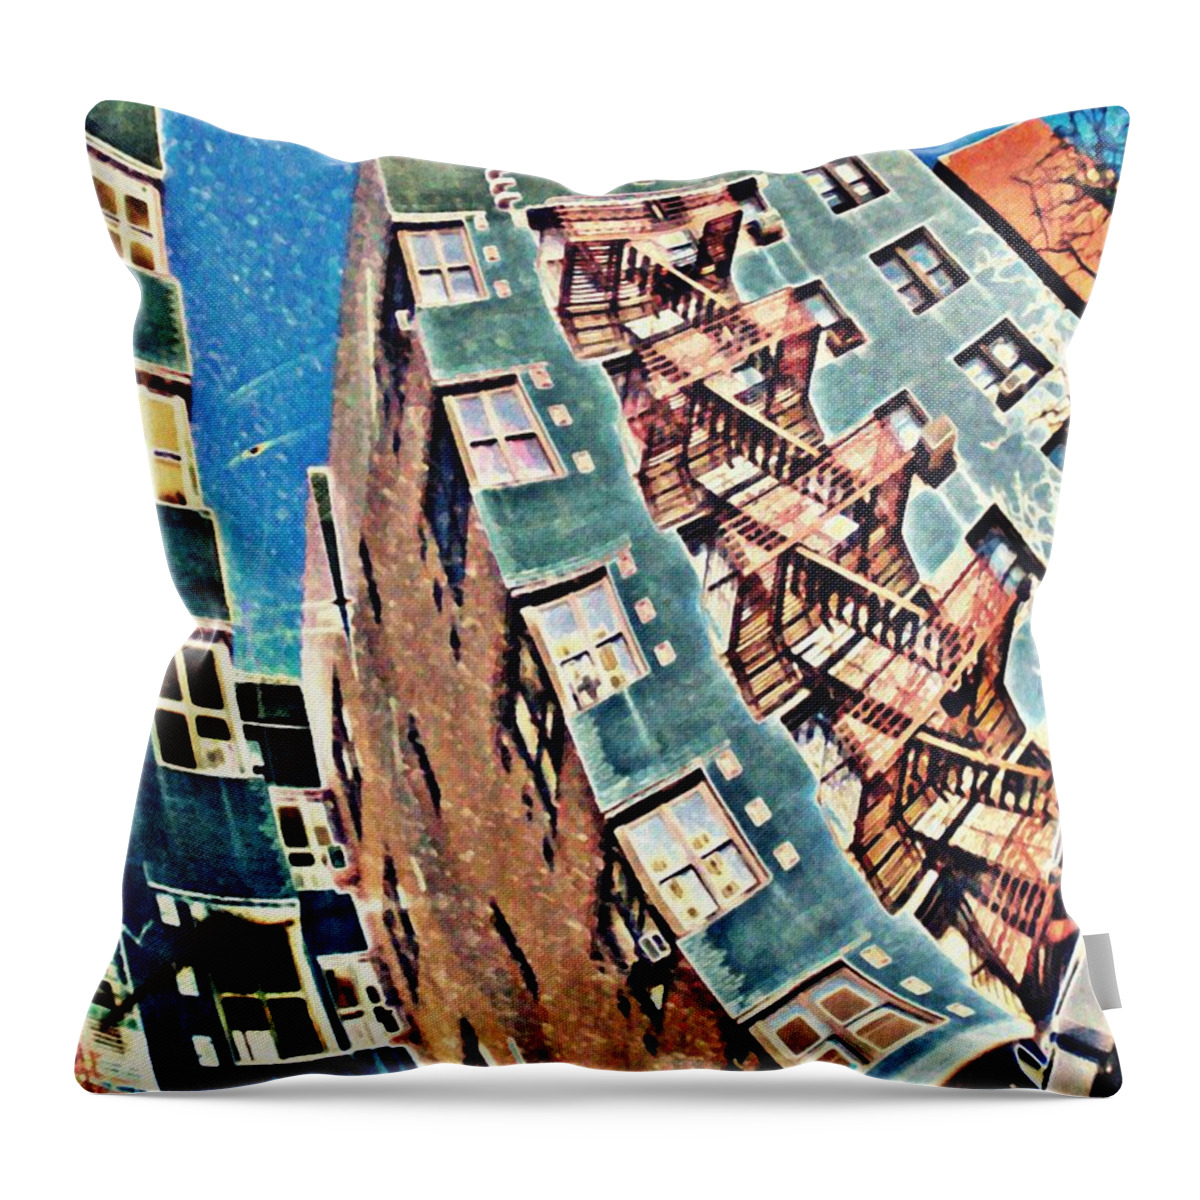 Building Throw Pillow featuring the photograph Fort Washington Avenue Building by Sarah Loft